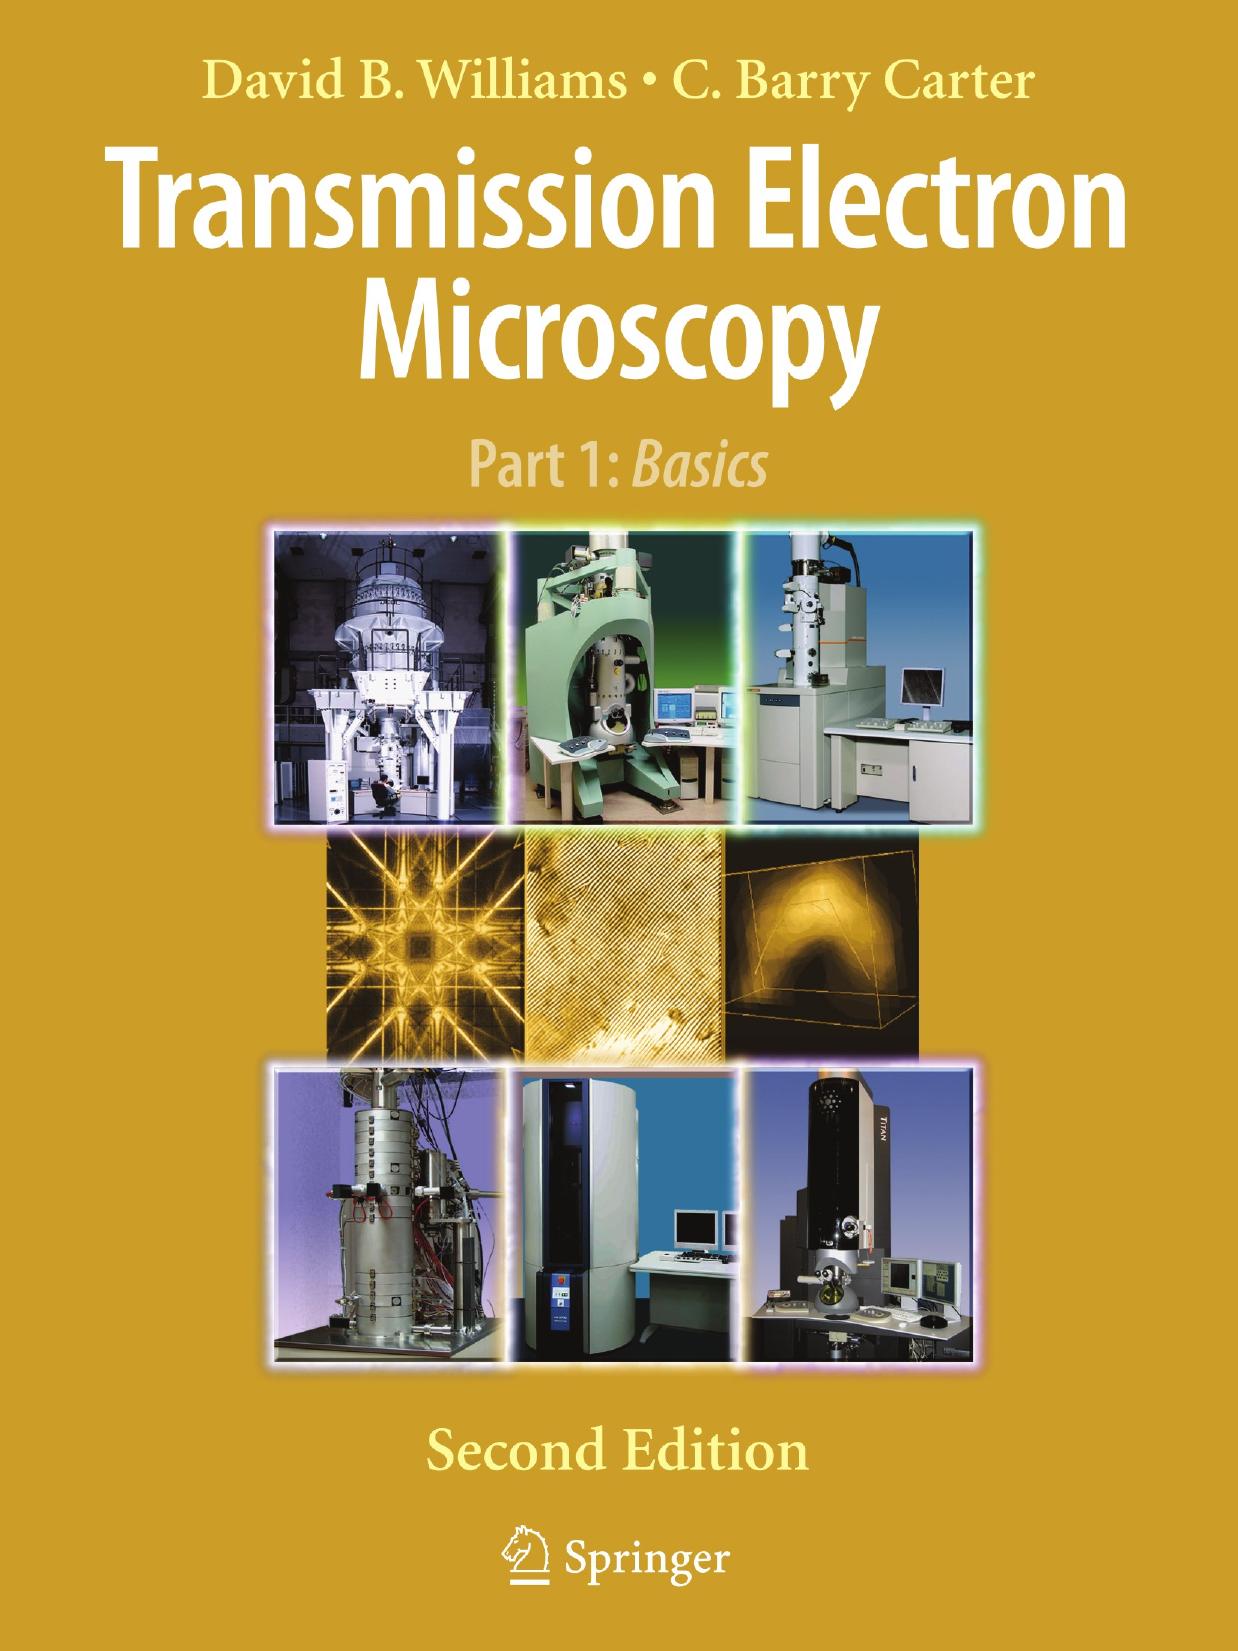 TransmissionElectronMicroscopy 2009